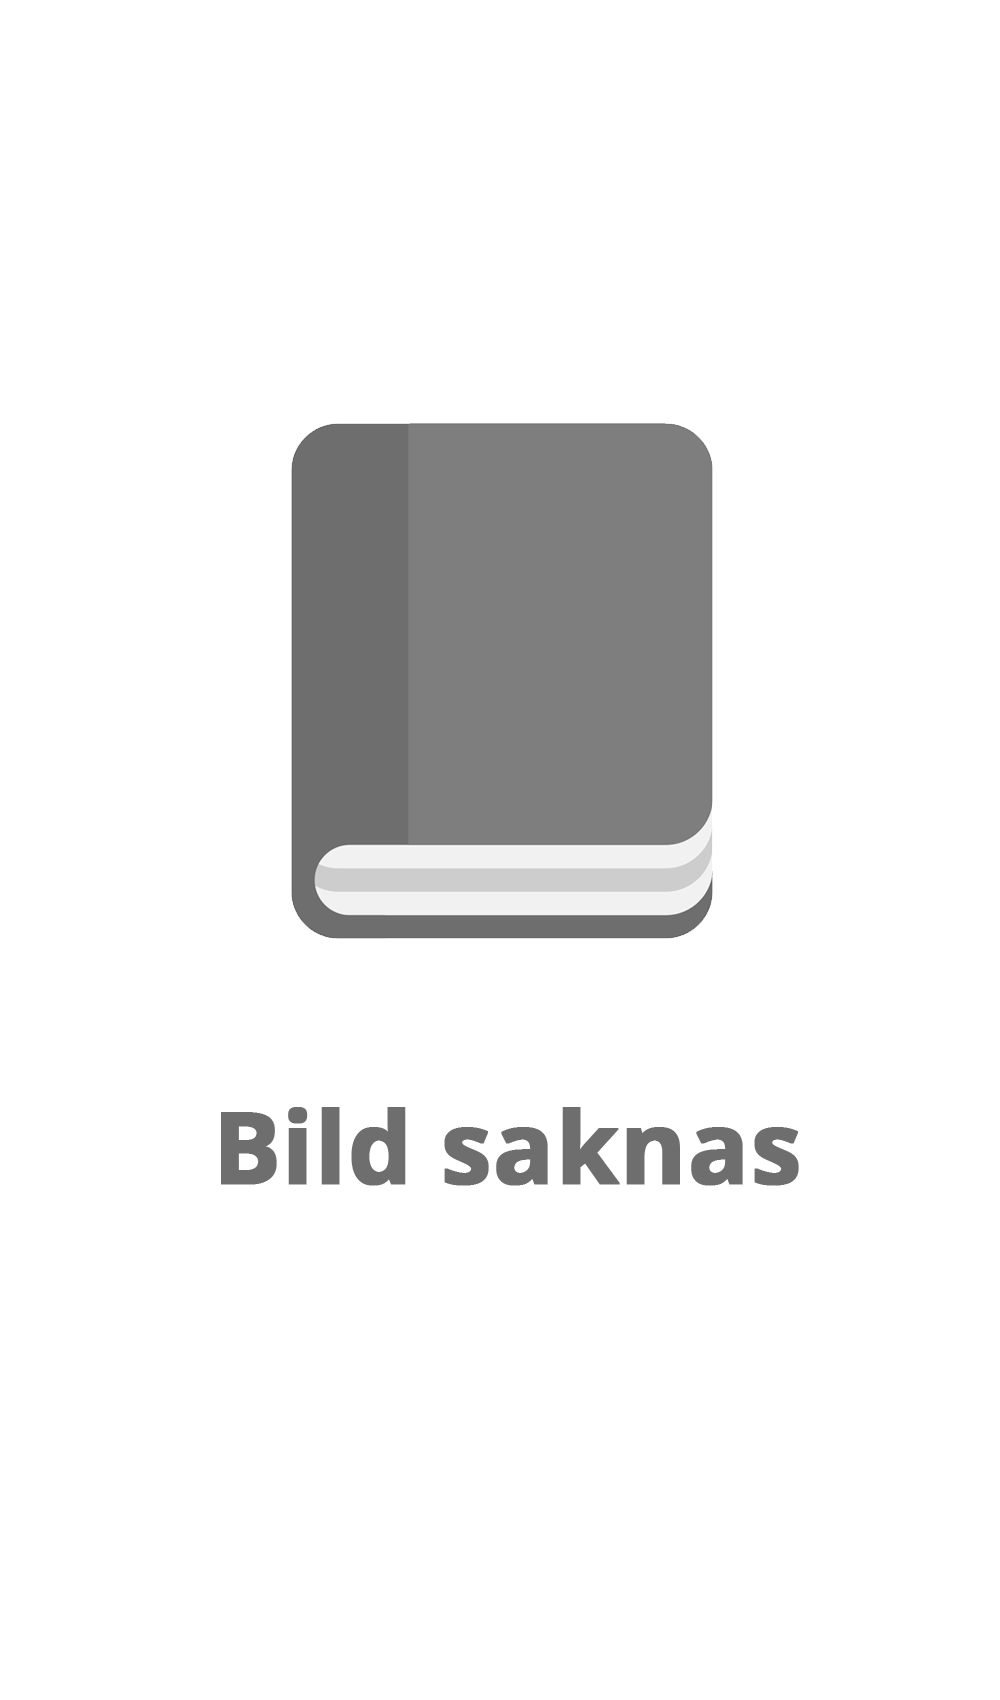 Bilda logo, go to homepage